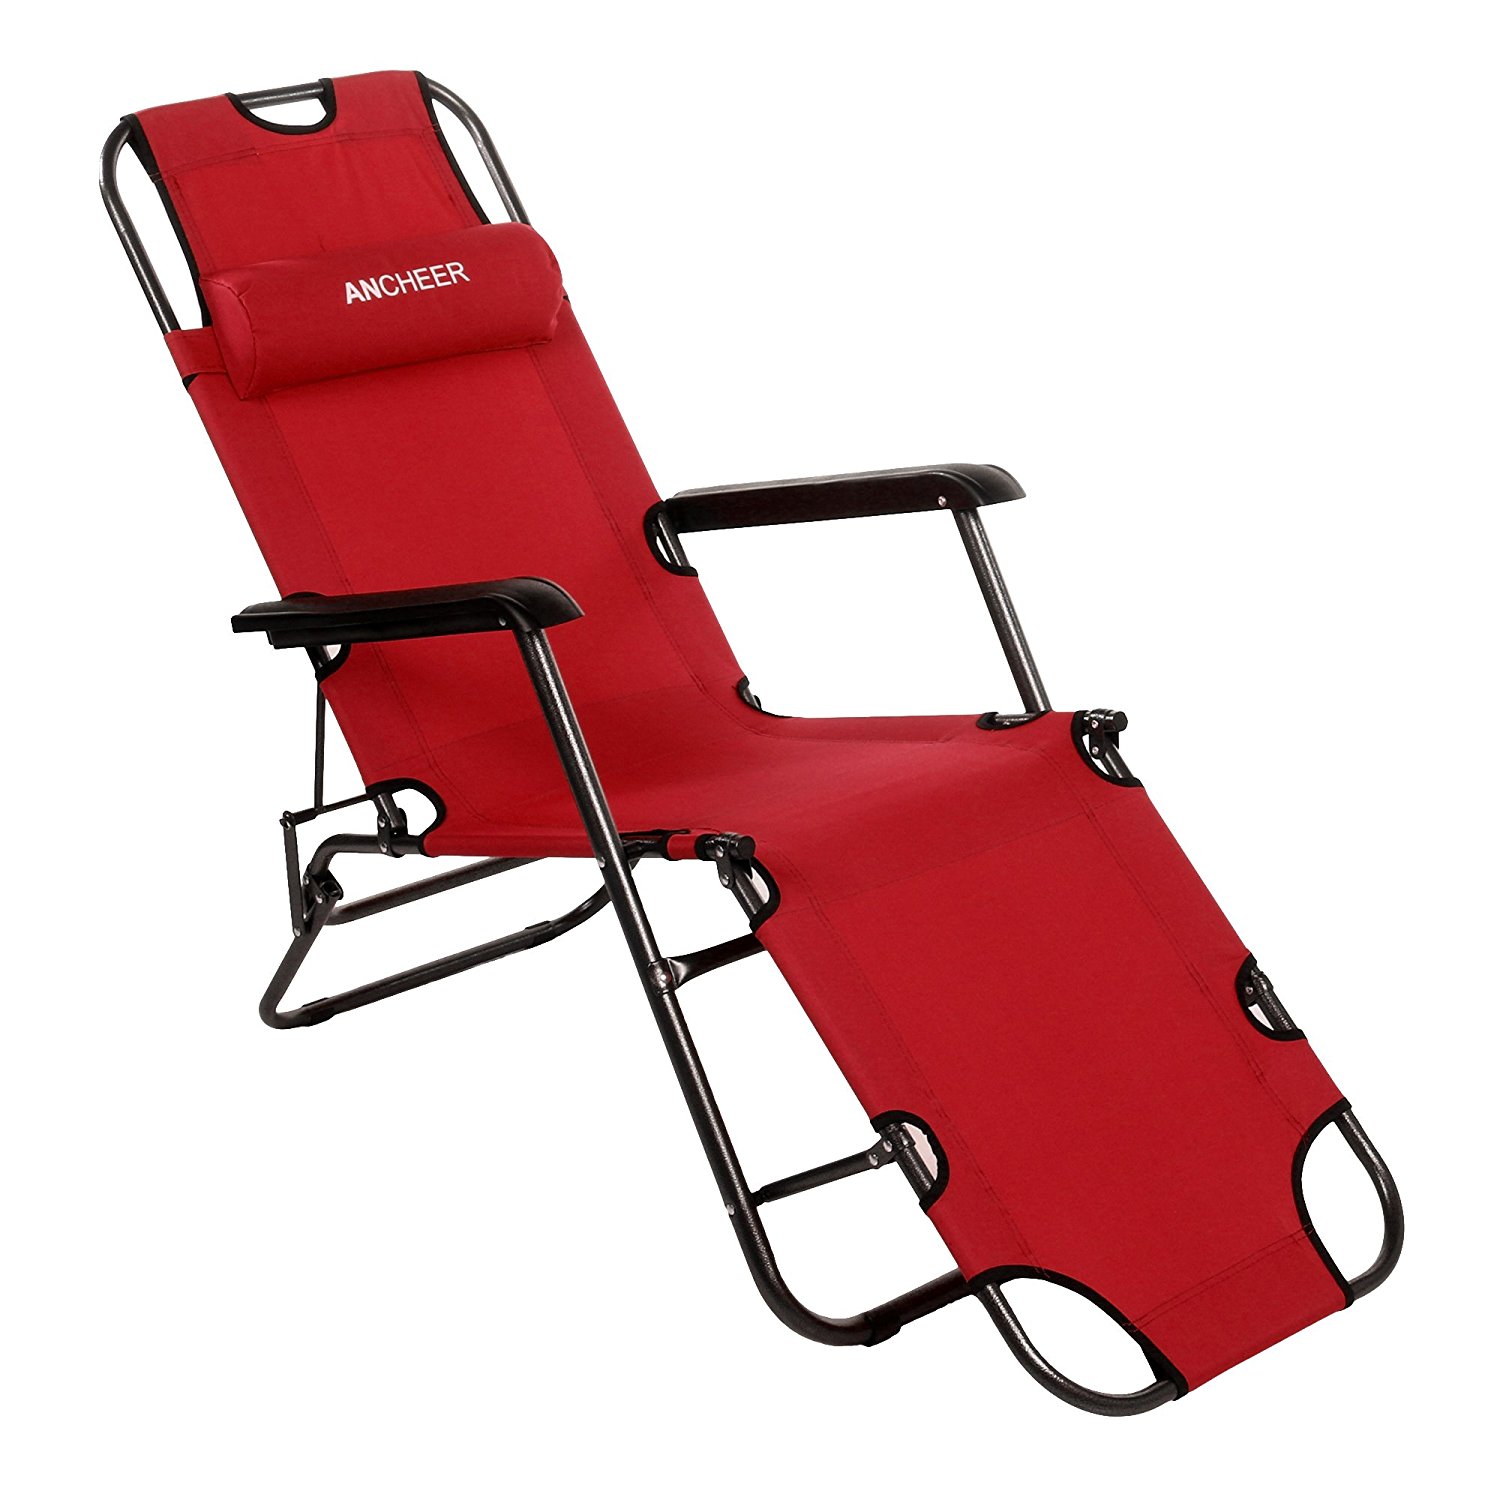 Ancheer outdoor lounge outdoor recliner for $32.16